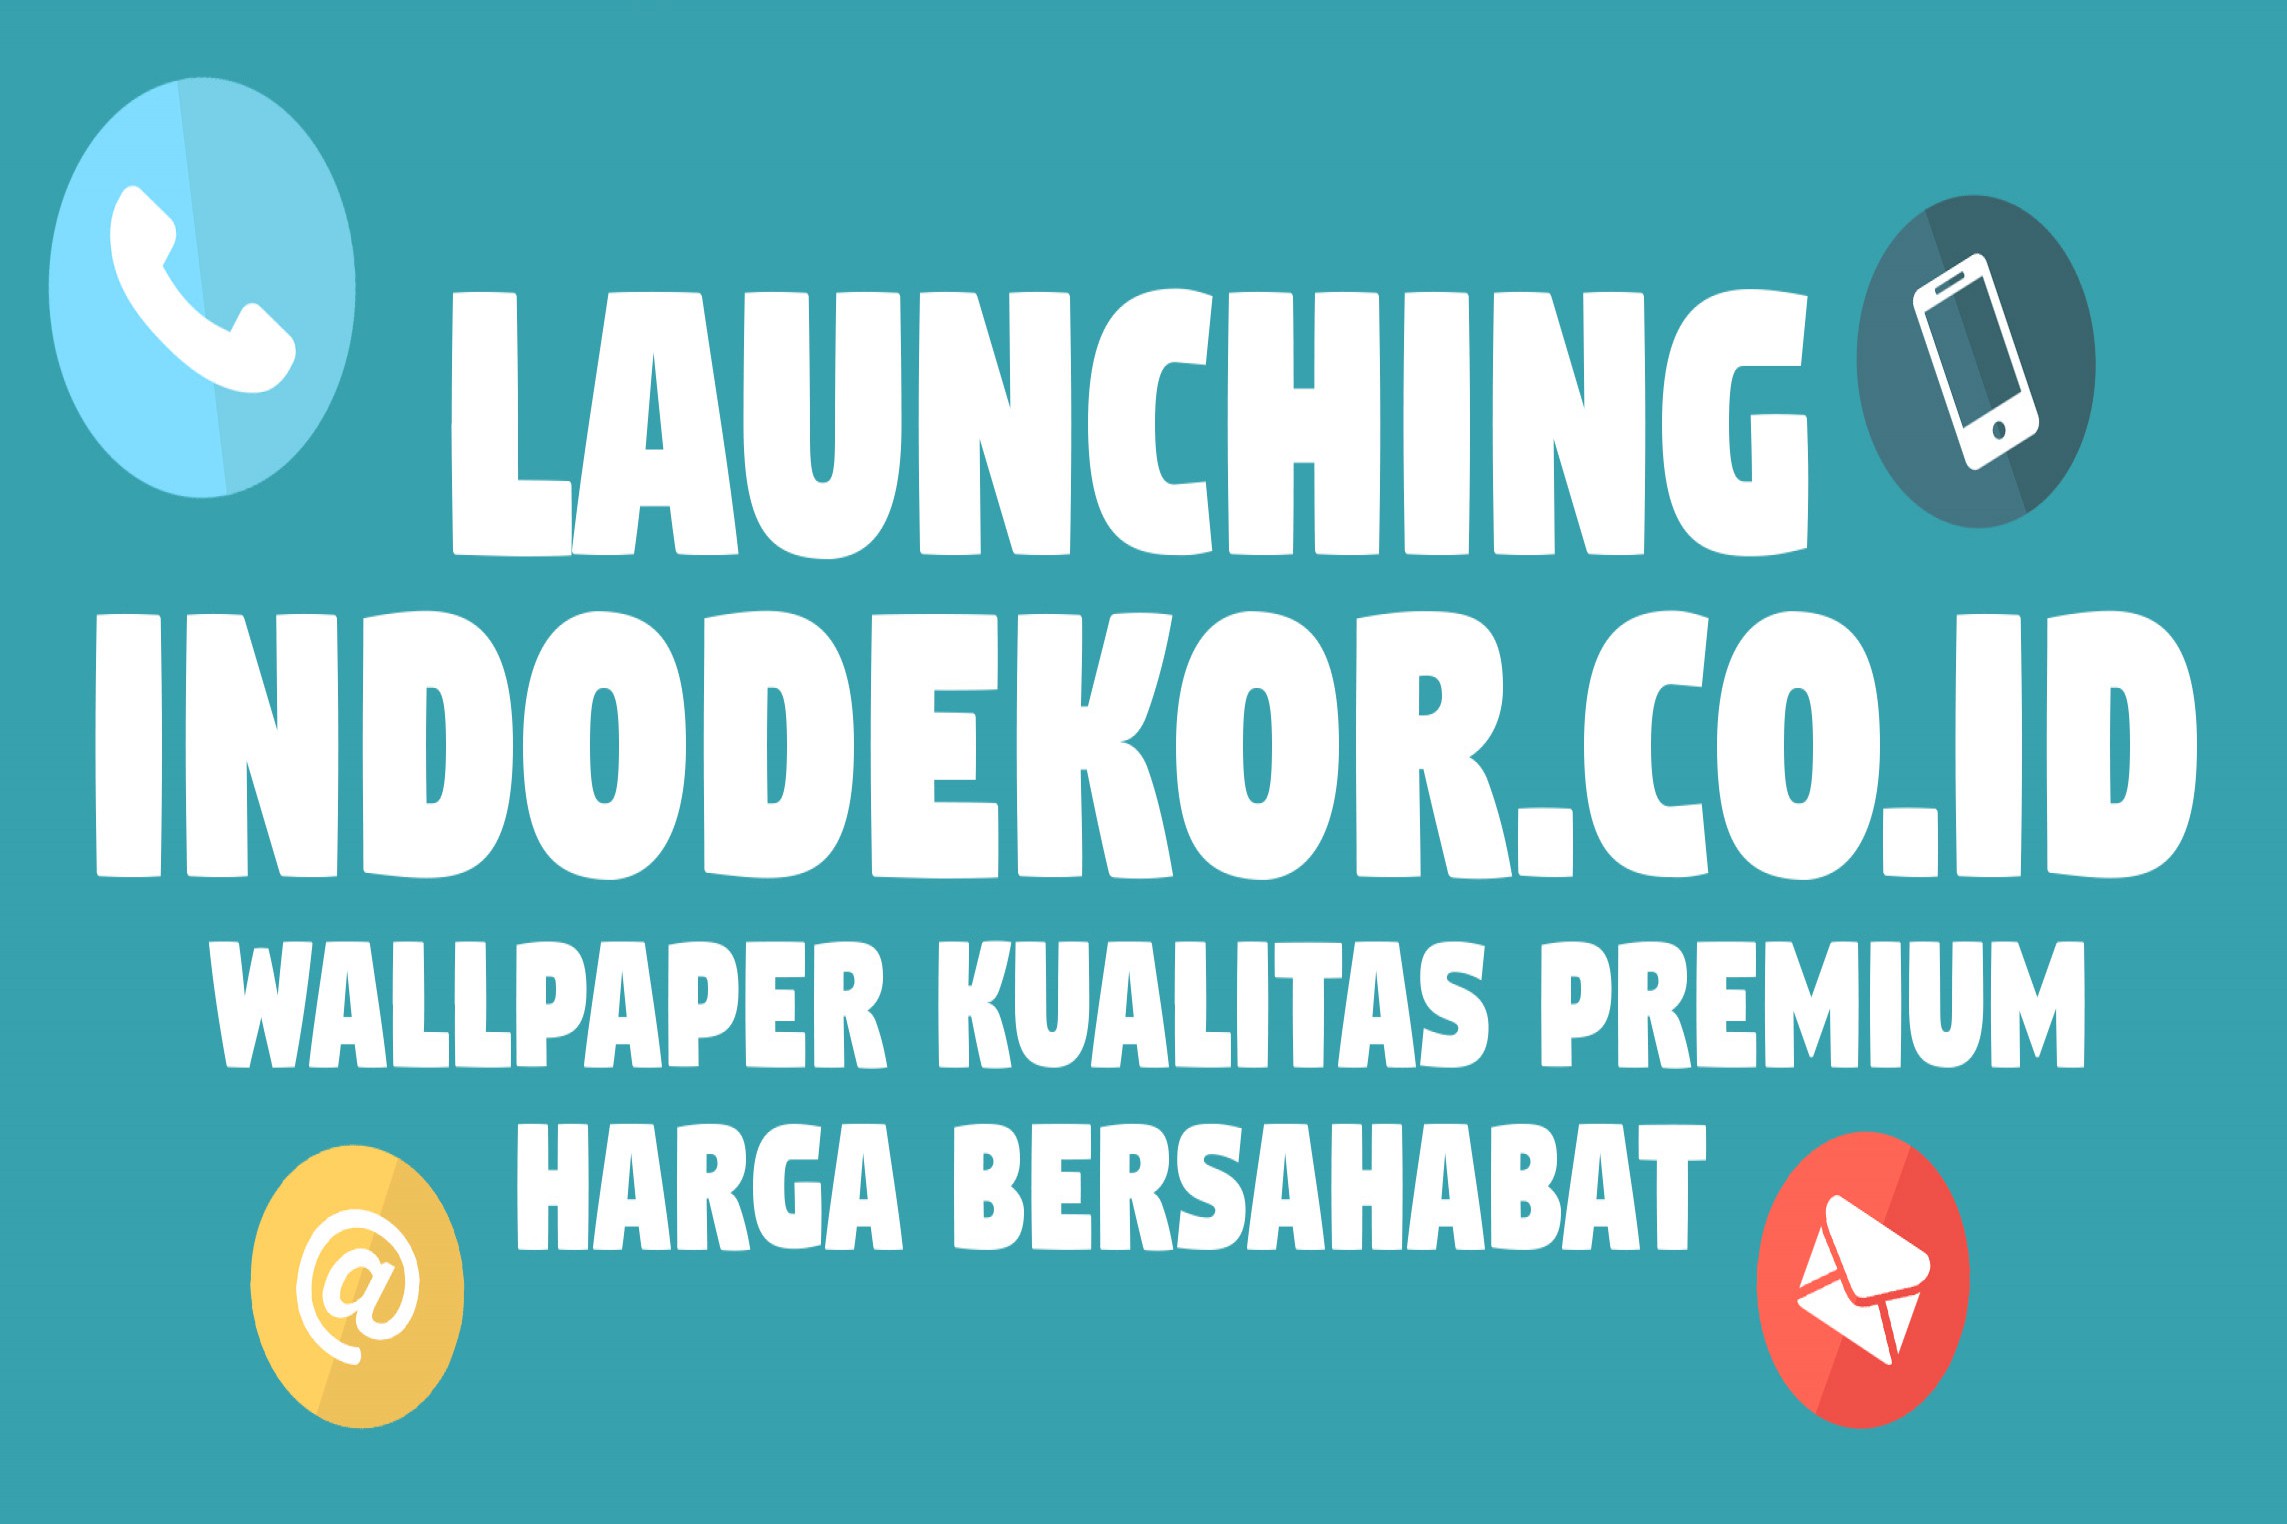 artikel Launching indodekor.co.id